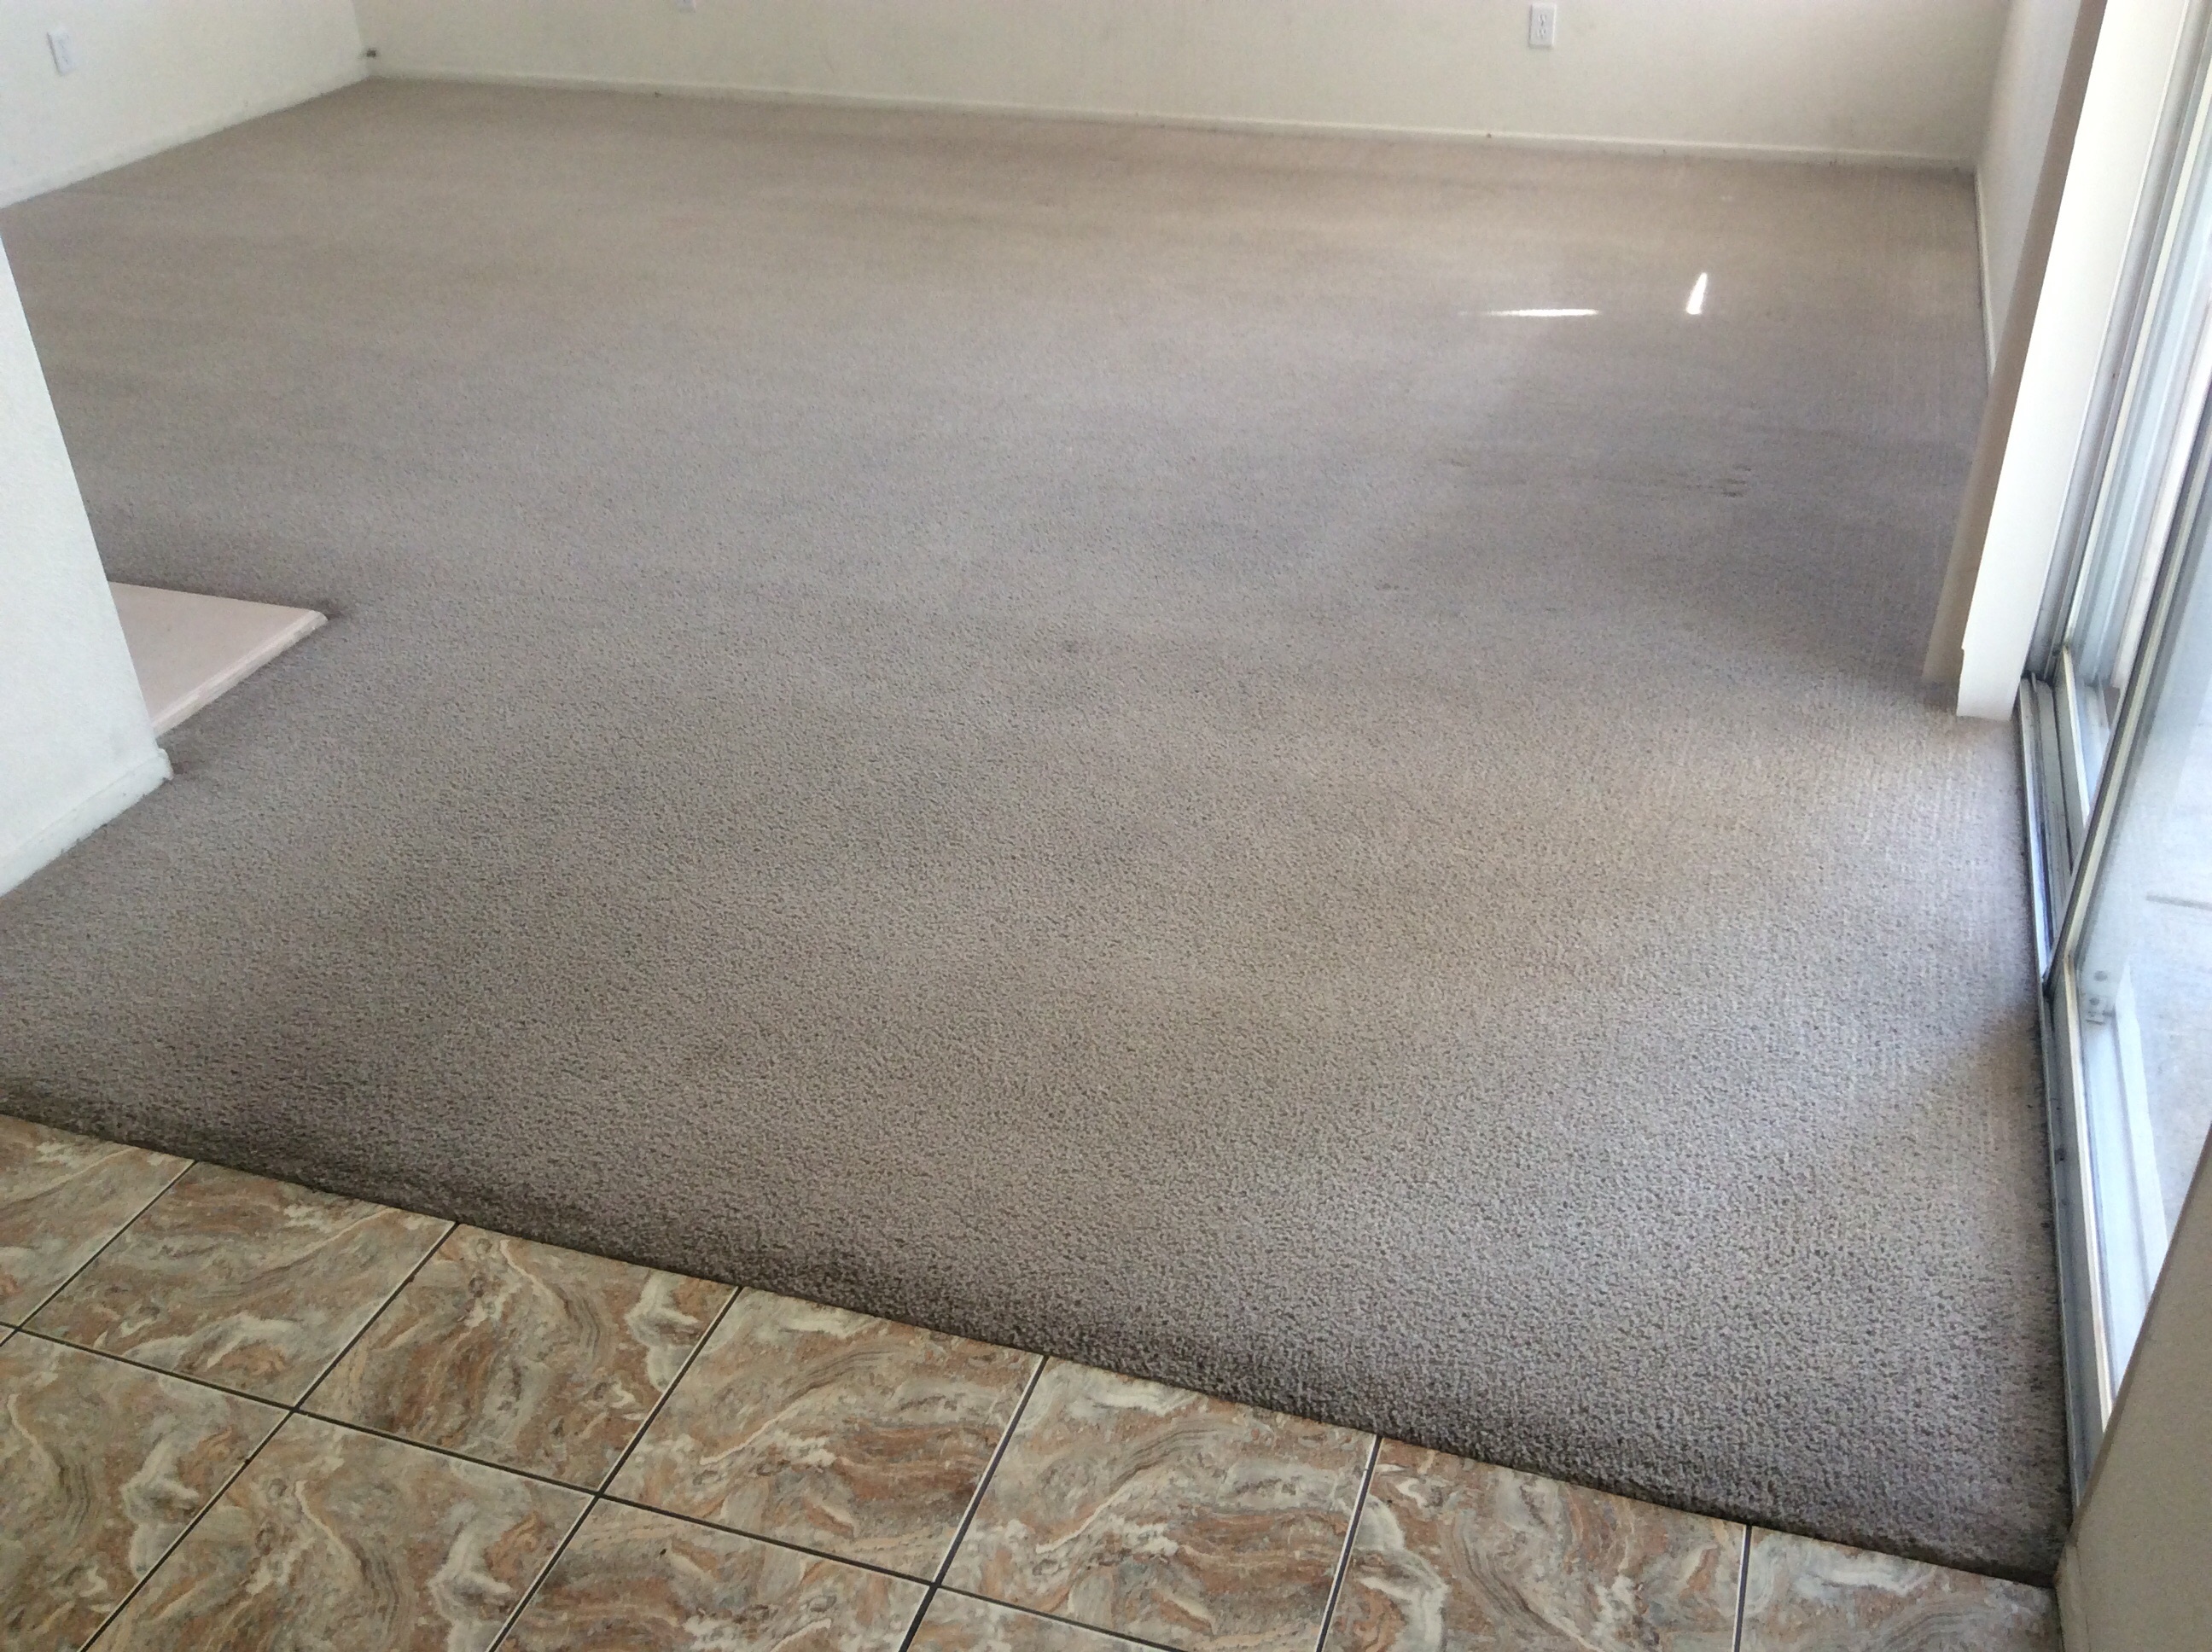 Carpet After Heaven's Best Carpet Cleaning